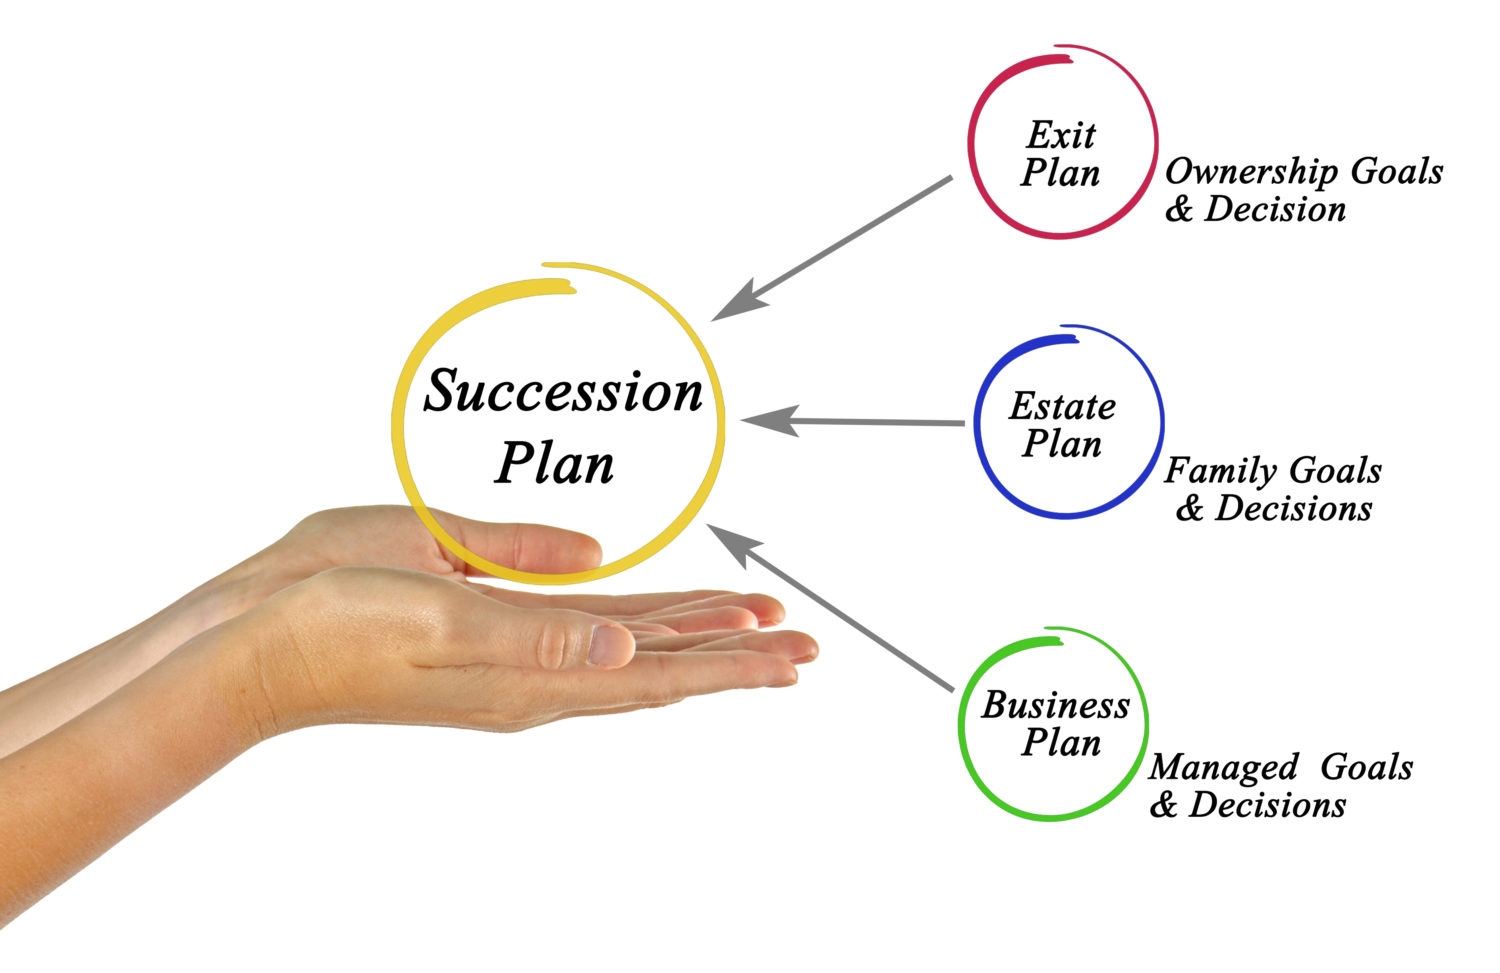 Succession Plan